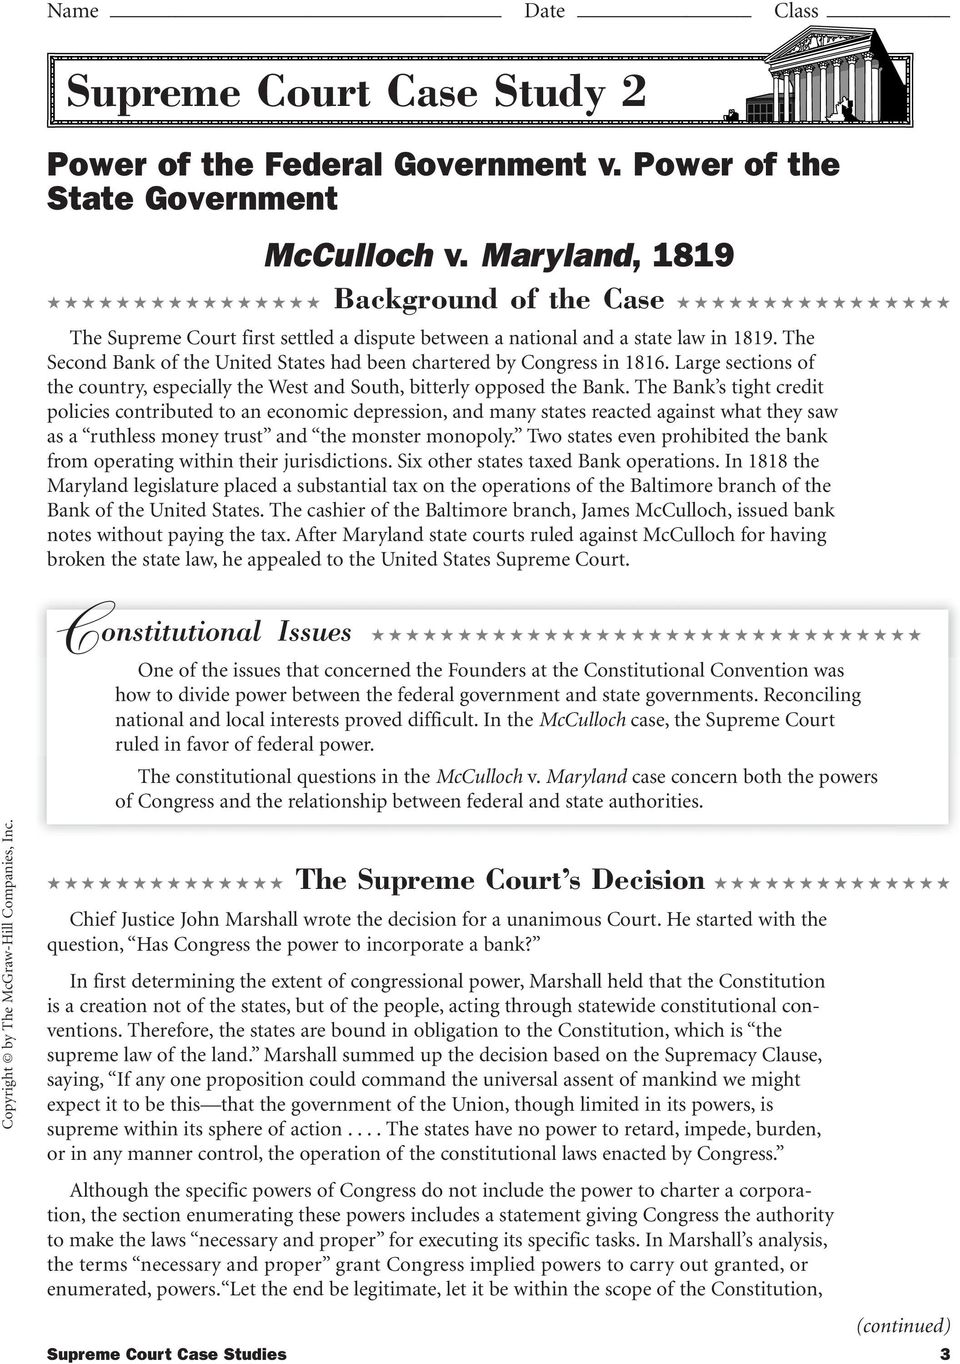 supreme court case studies pdf